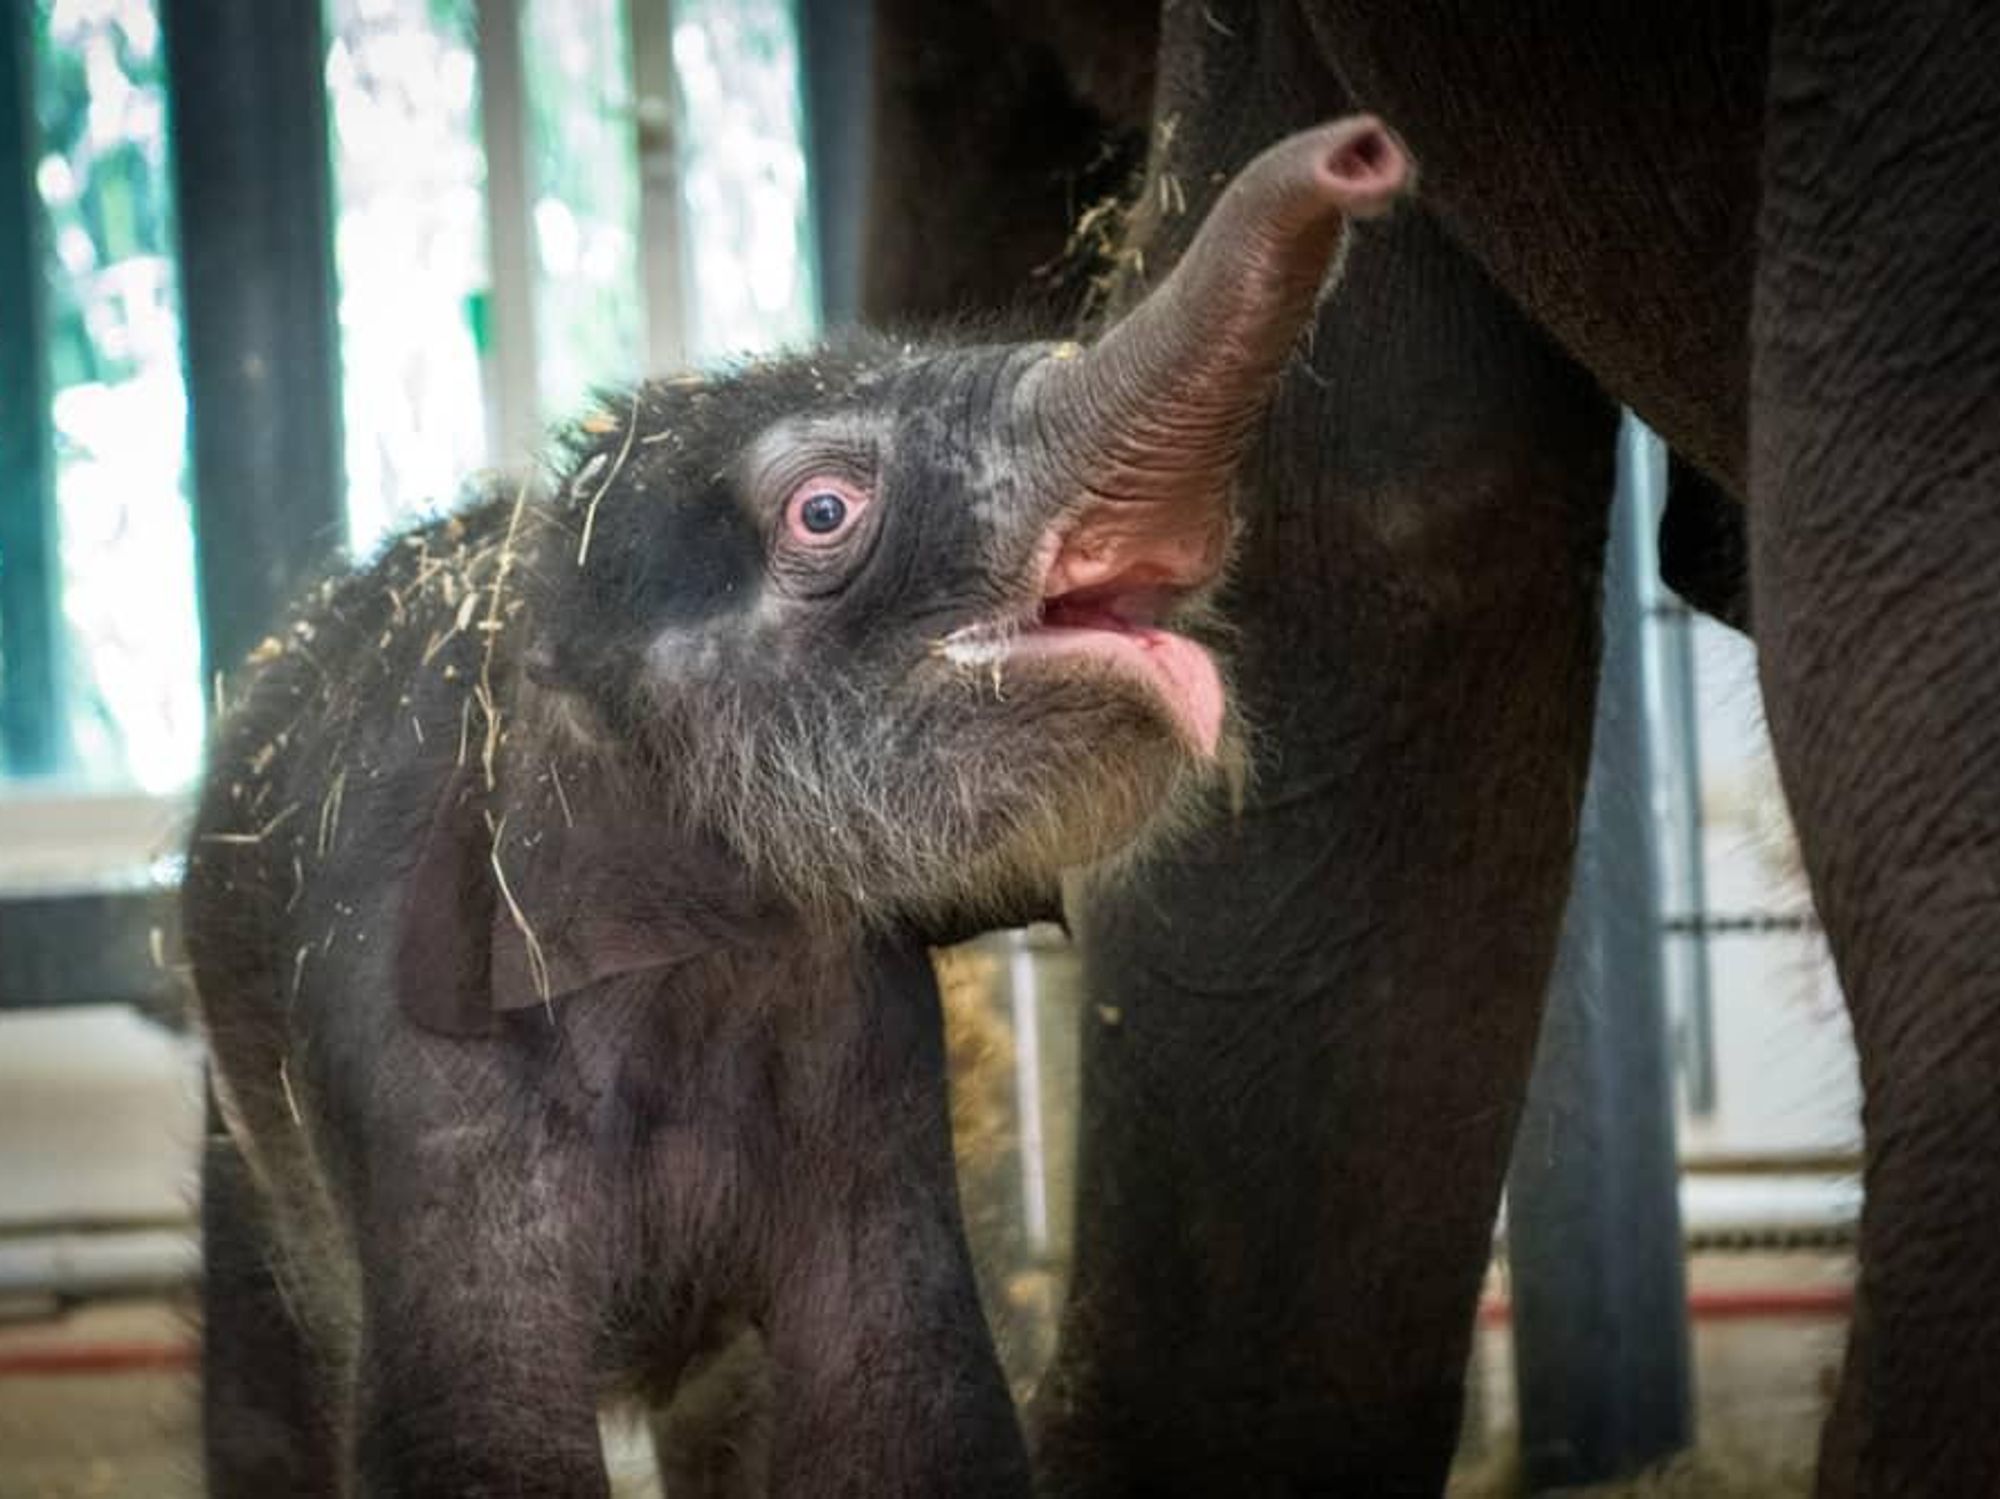 Nelson baby elephant Houston Zoo